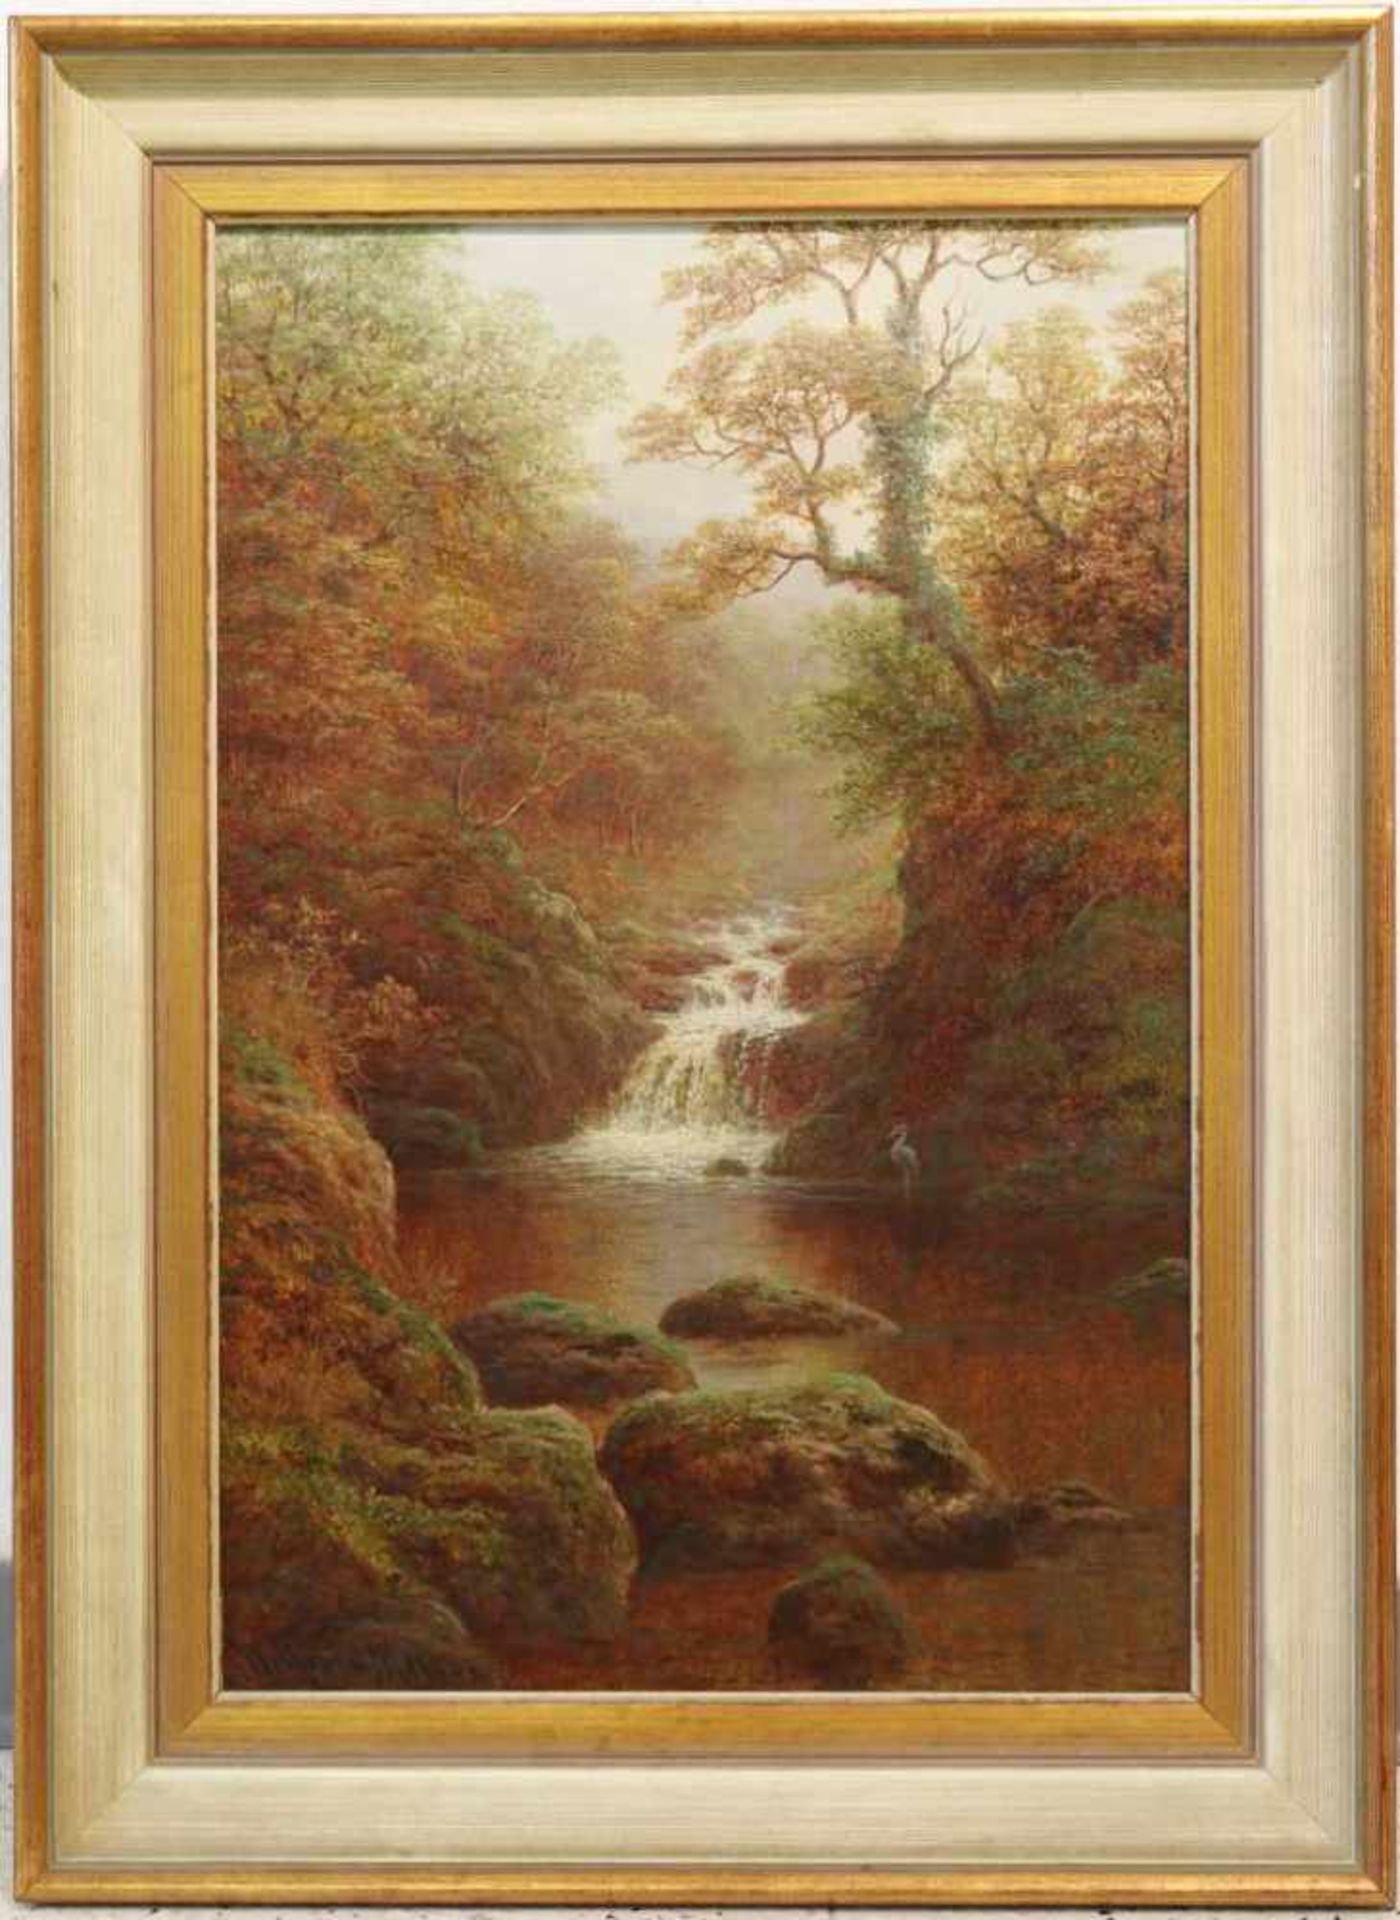 William MELLOR (1851-1931), Scandale Ghyll, Near Ambleside, Westmoreland, Öl auf Leinwand, u.re. - Bild 2 aus 4